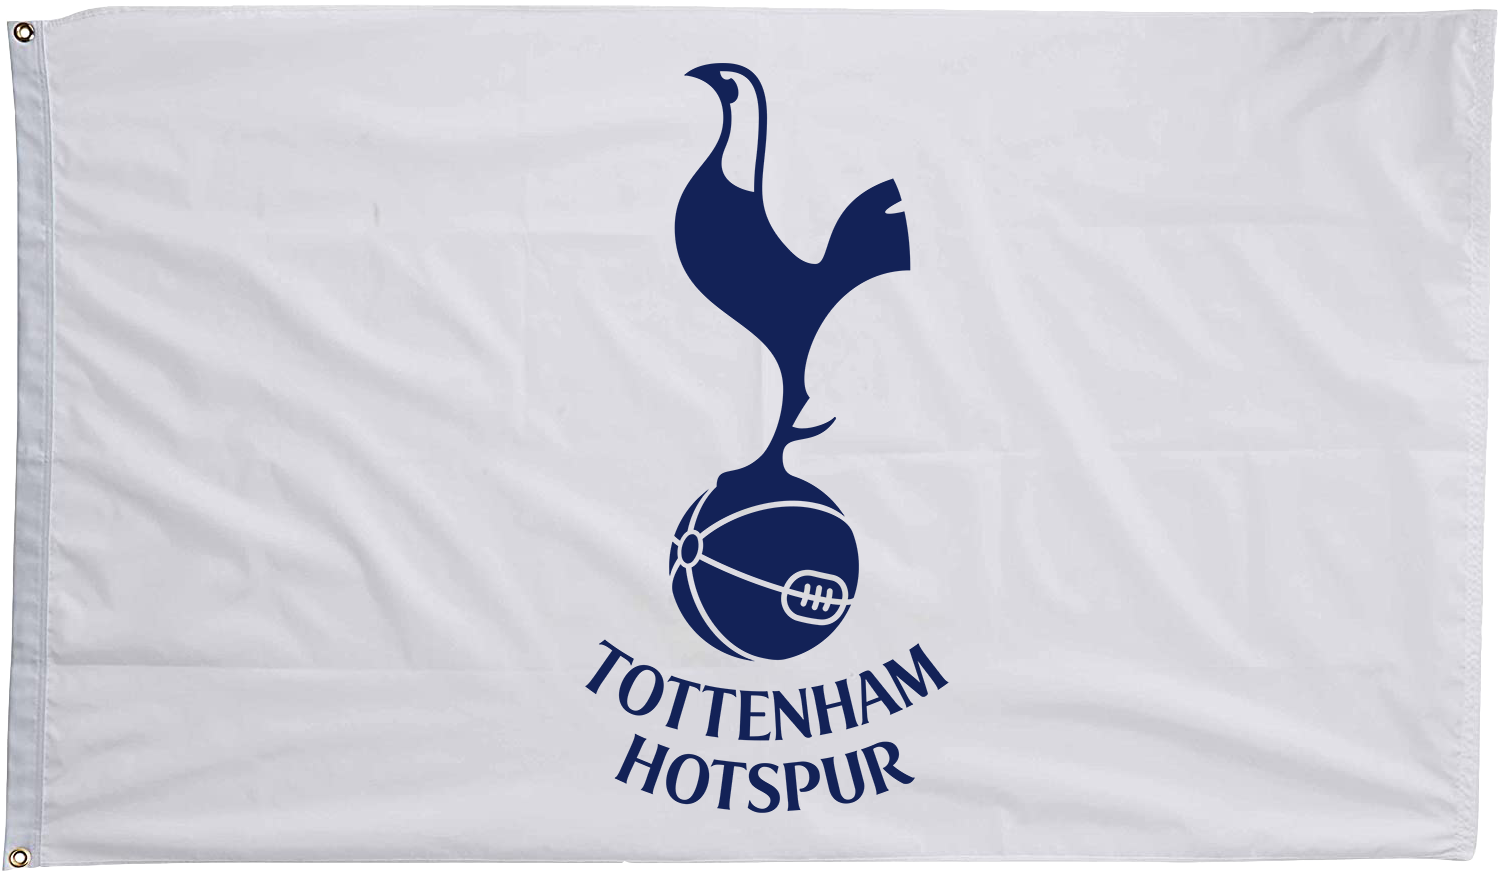 Tottenham Hotspur Flag Banner 3x5ft The Spurs